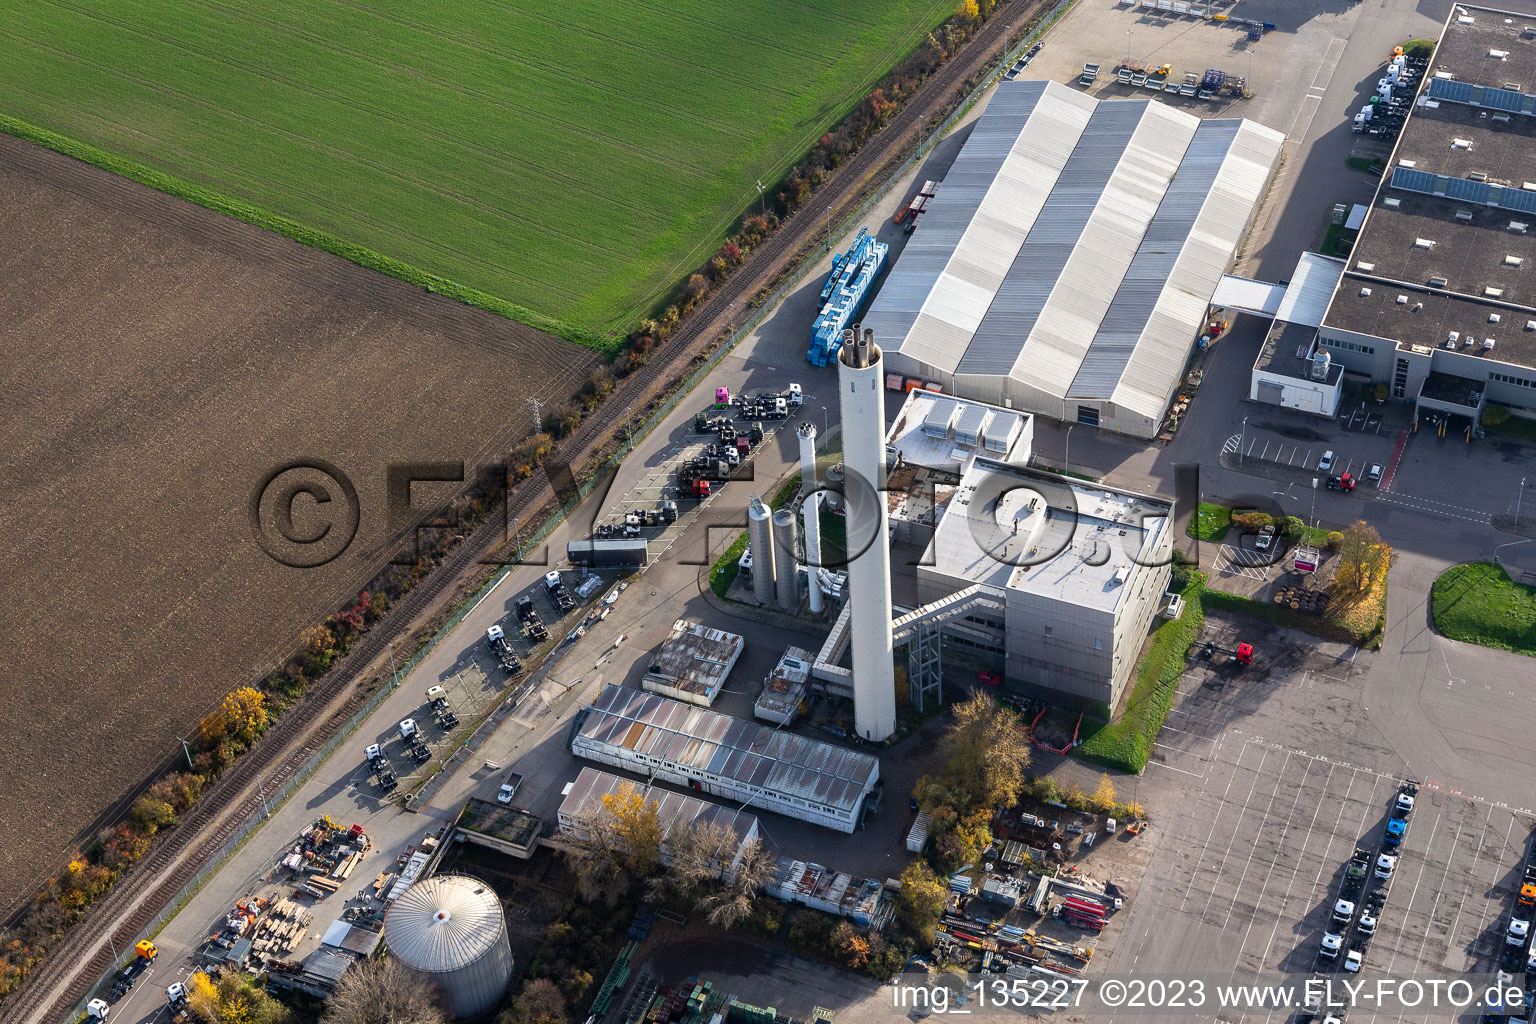 Daimer Truck AG power plant in Wörth am Rhein in the state Rhineland-Palatinate, Germany